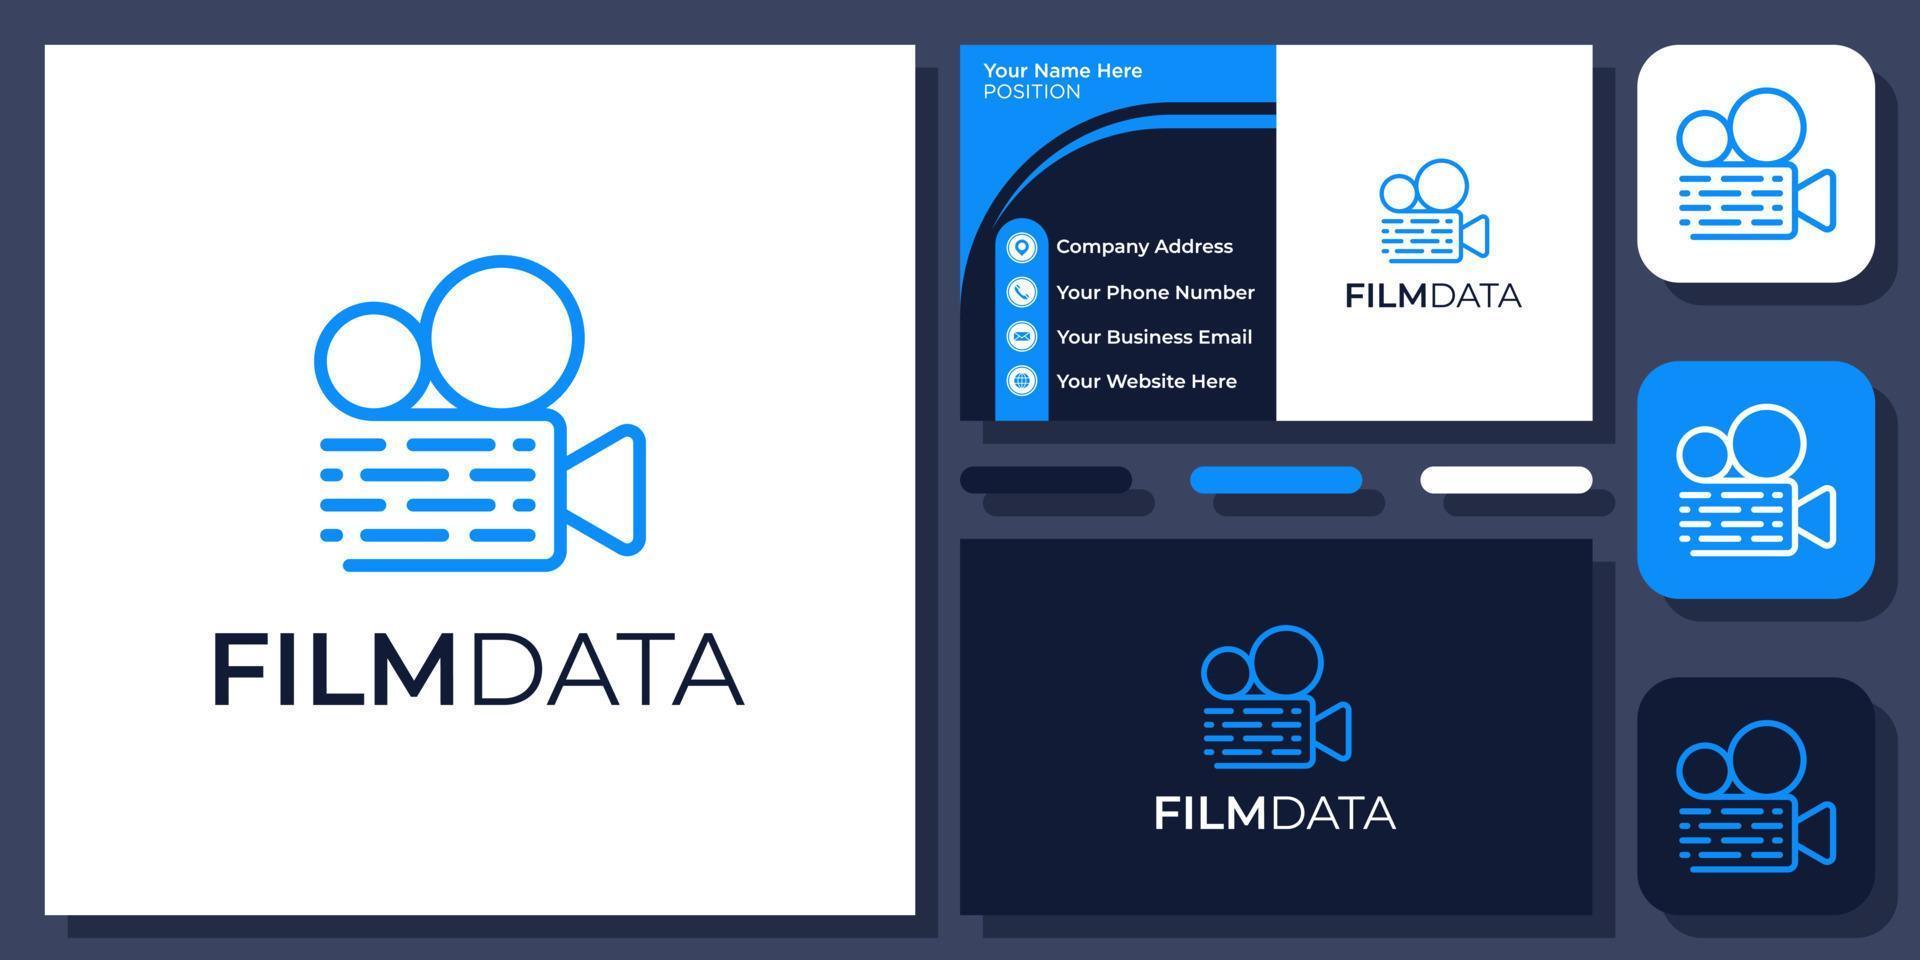 Kamera Film Datentechnologie digitales Kino modernes einfaches Vektor-Logo-Design mit Visitenkarte vektor